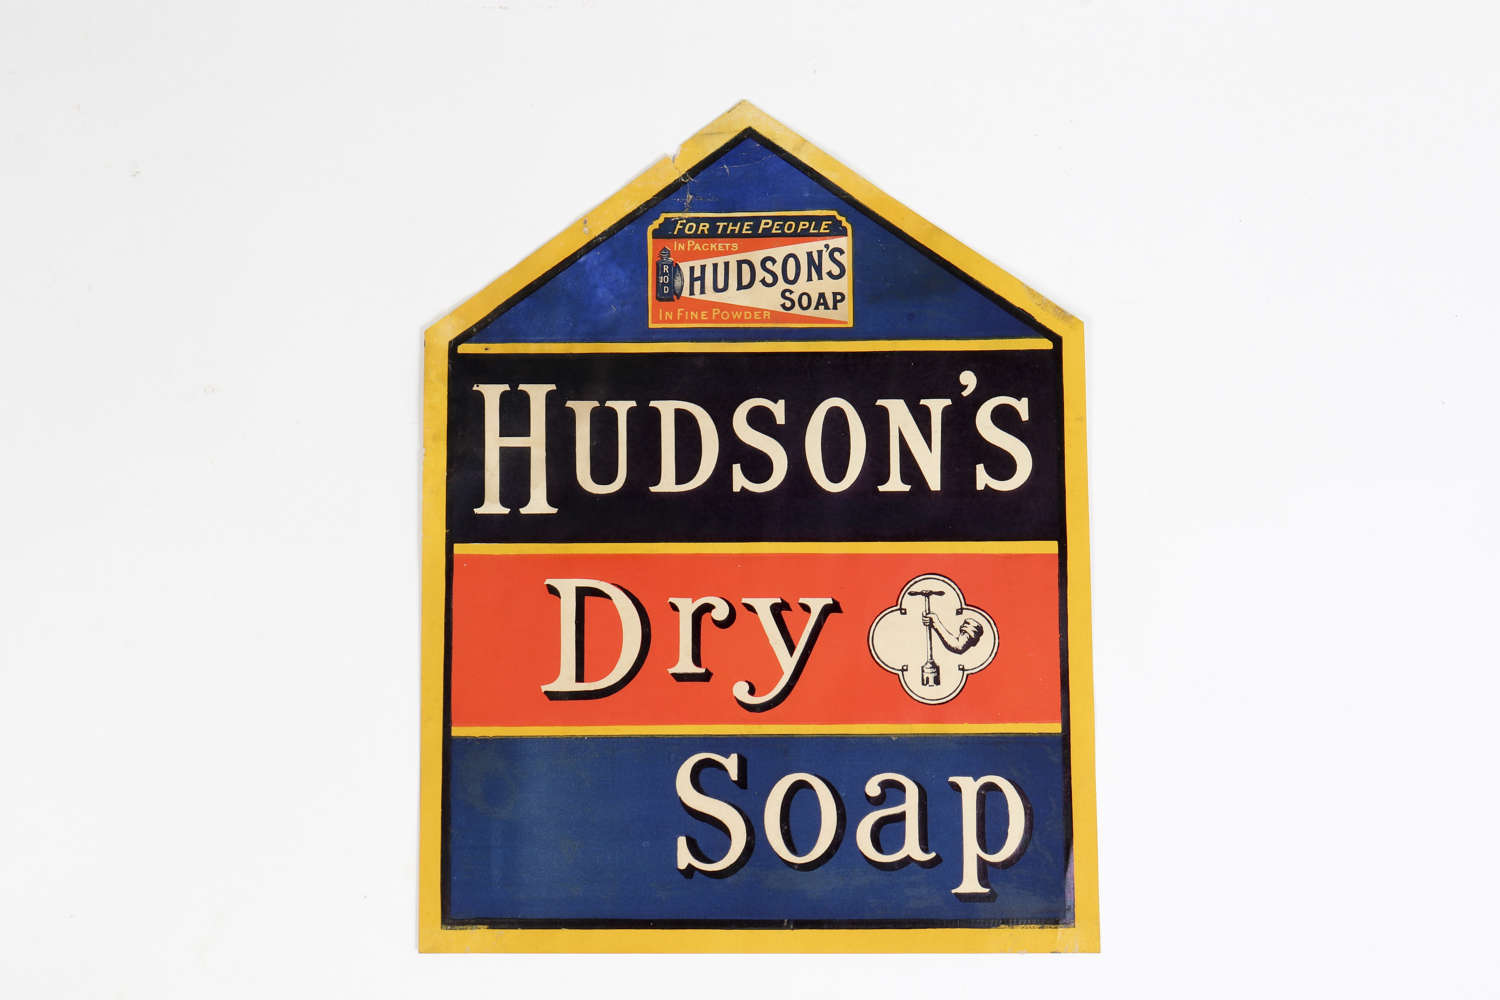 Original shop display advertising poster for Hudson's Soap